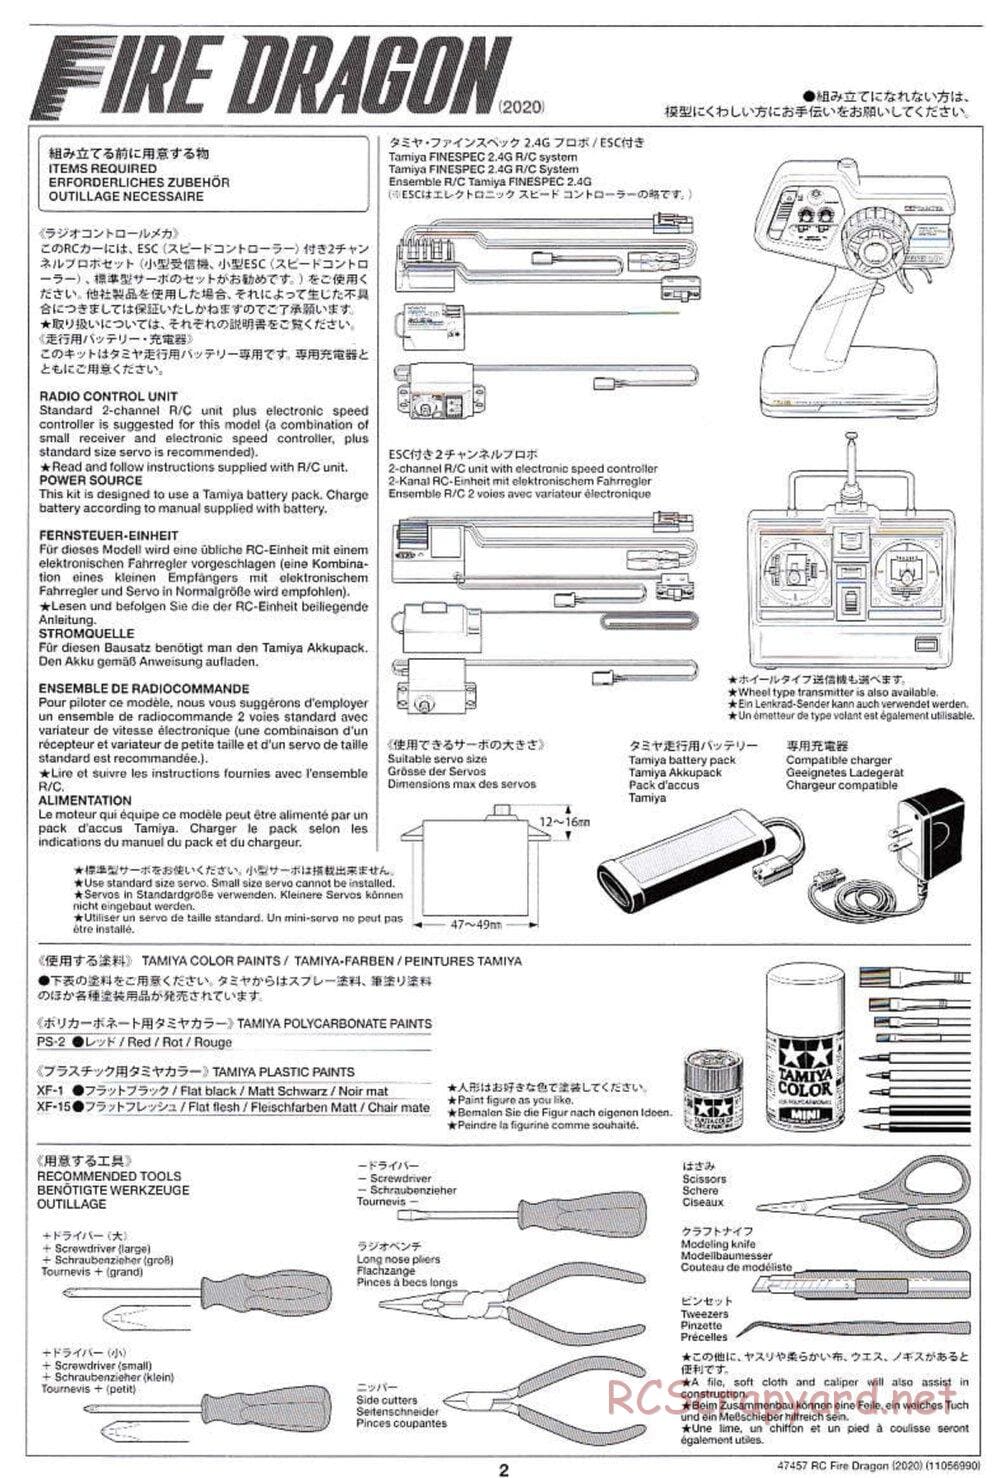 Tamiya - Fire Dragon (2020) Chassis - Manual - Page 2